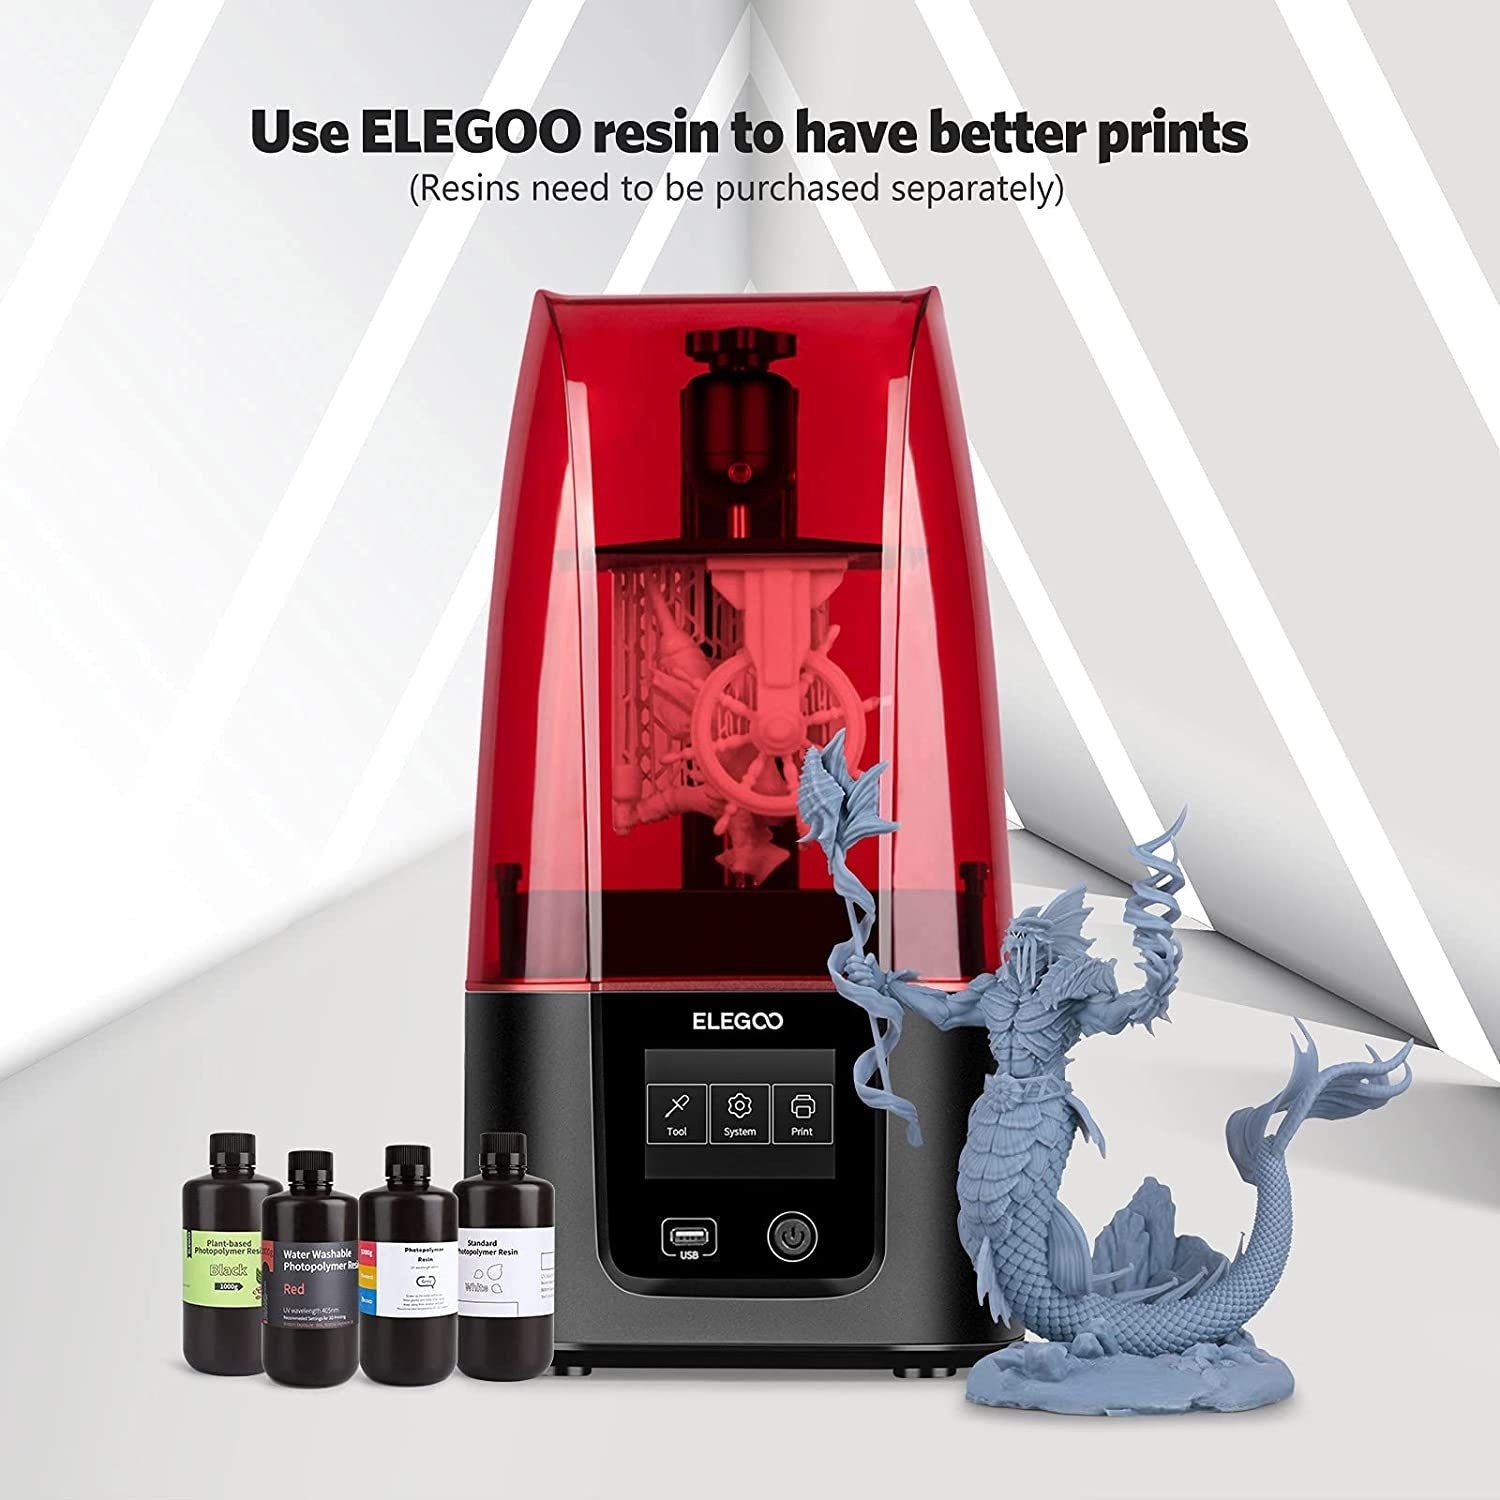 ELEGOO Resin 3D Printer Mars 3 Pro MSLA 6.6 Ultra 4K Mono LCD  143.43×89.6×175mm